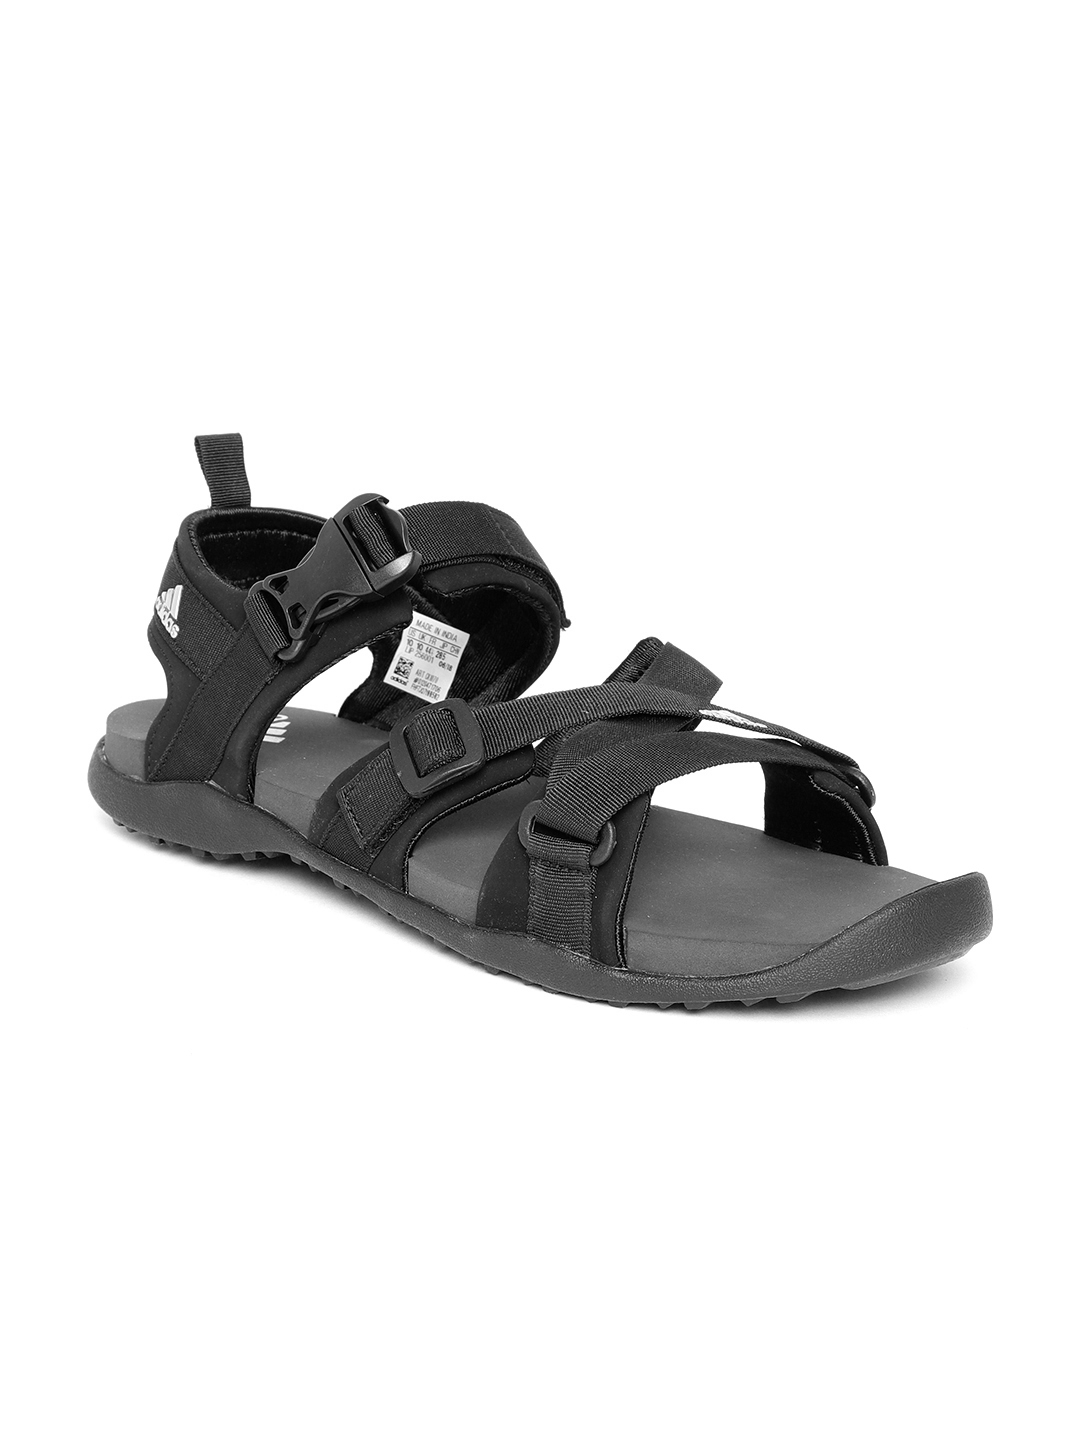 ADIDAS Men Black Gladi Sports Sandals 